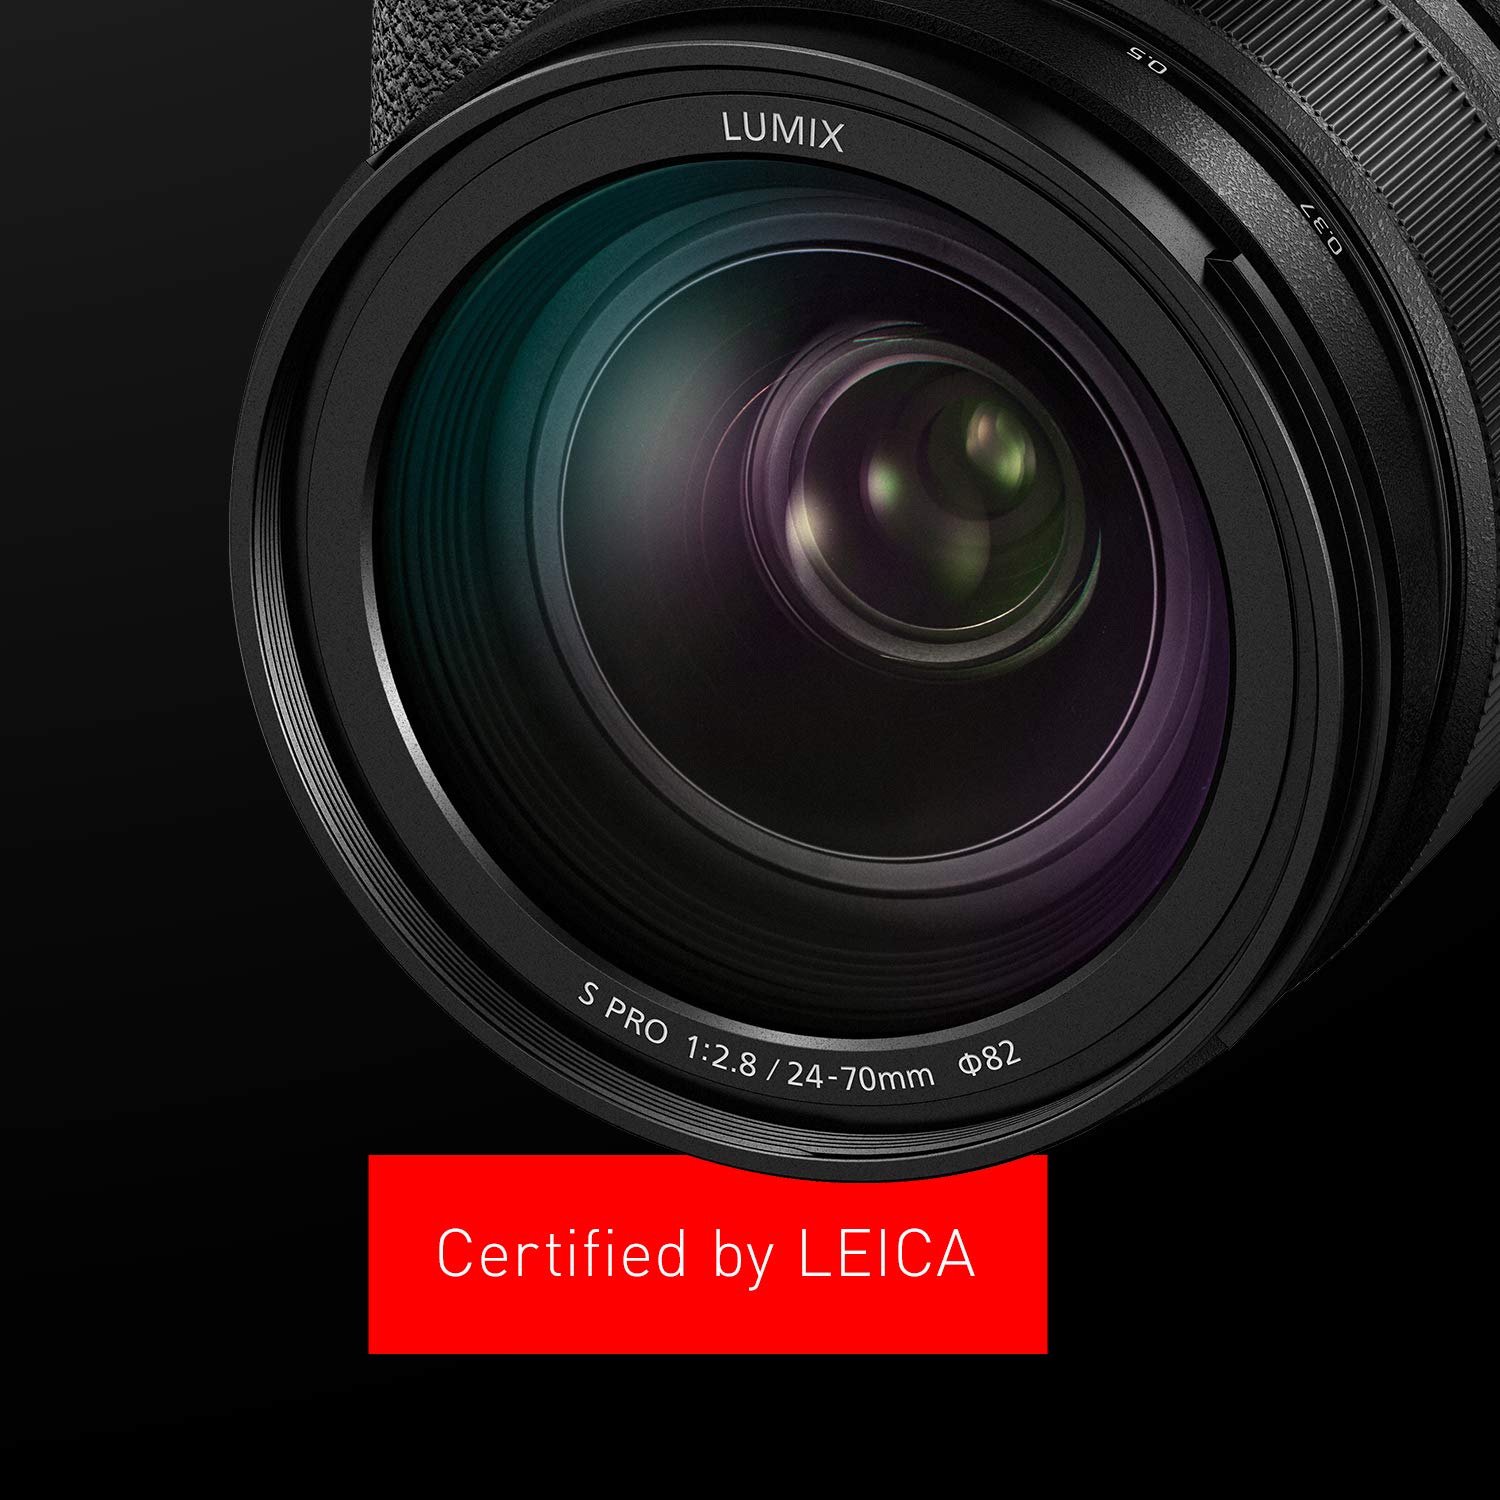 松下 Lumix S Pro 24-70mm F2.8 L 镜头